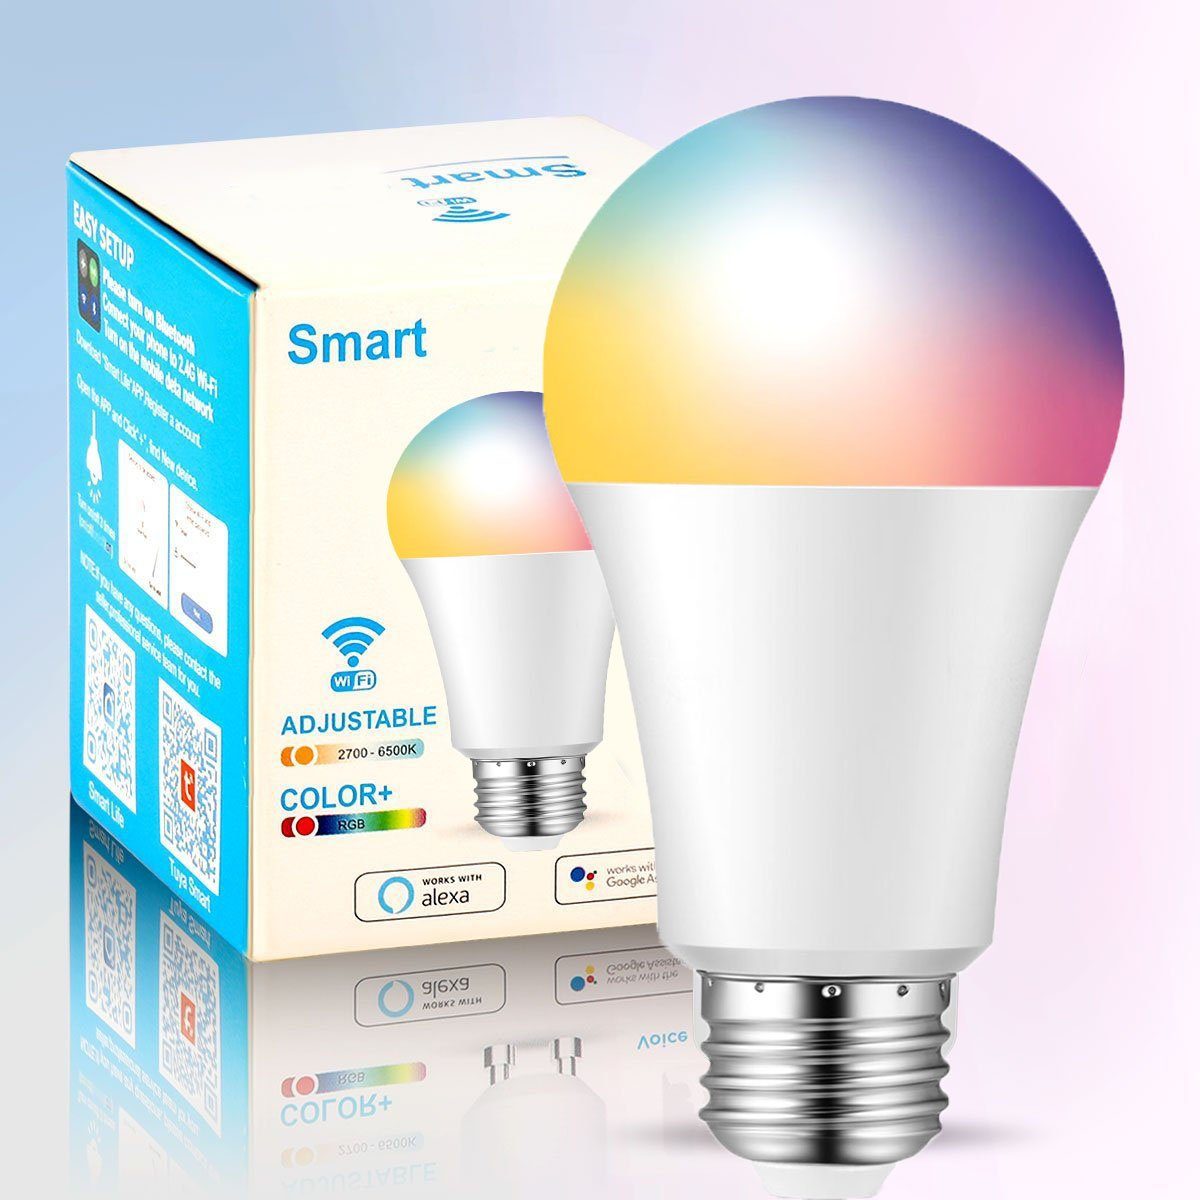 oyajia 1/2x E27 Smart Lampe 9W WiFI LED Lampe Dimmbar for Smart Home Alexa  Smarte Lampe, RGB Lampe LED E27 GlüHbirne, mit Alexa Echo, Google Home  Smarte Lampe